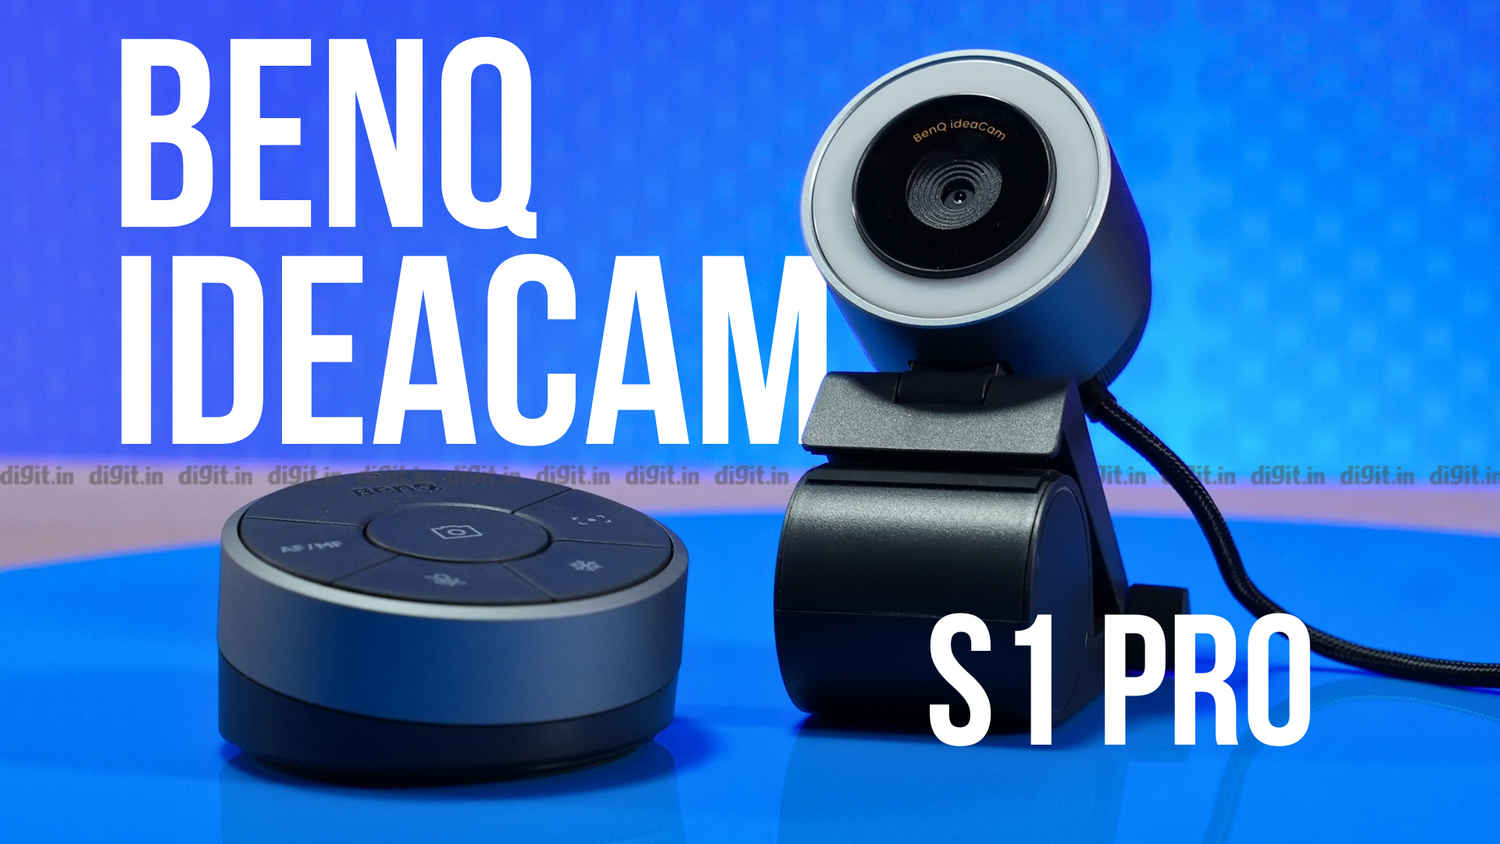 BenQ ideaCam S1 Pro review: a strictly mediocre webcam for work